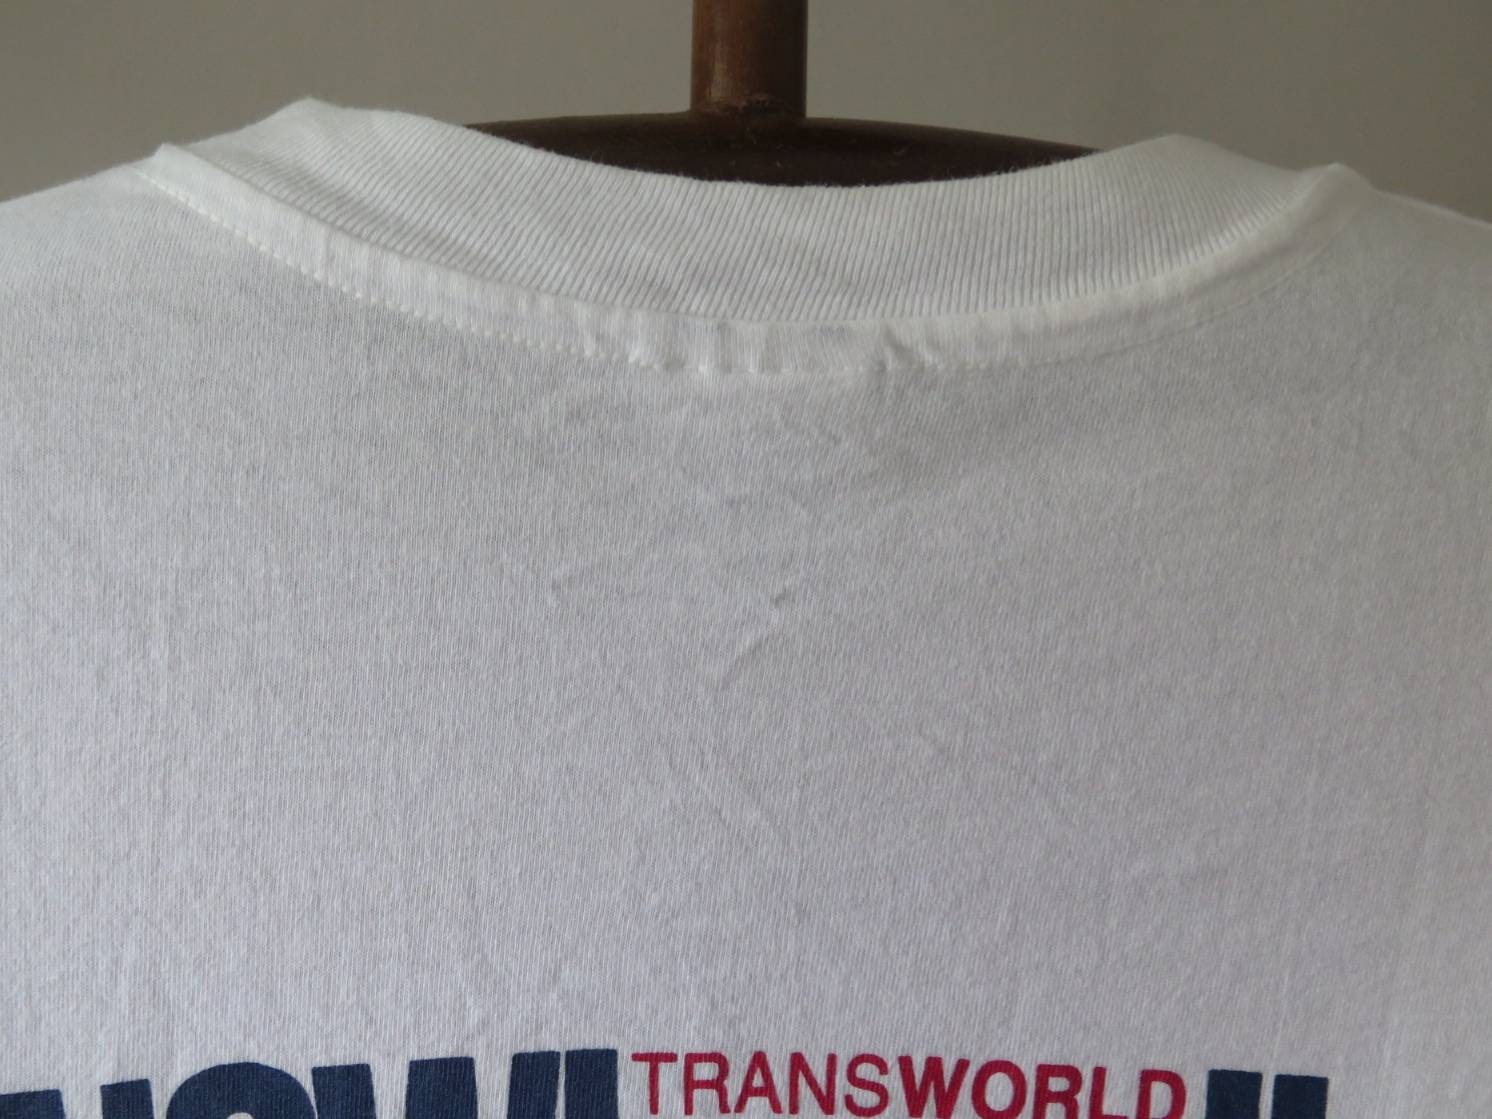 Vintage Transworld Magazine T Shirt 90s Transworld - Etsy